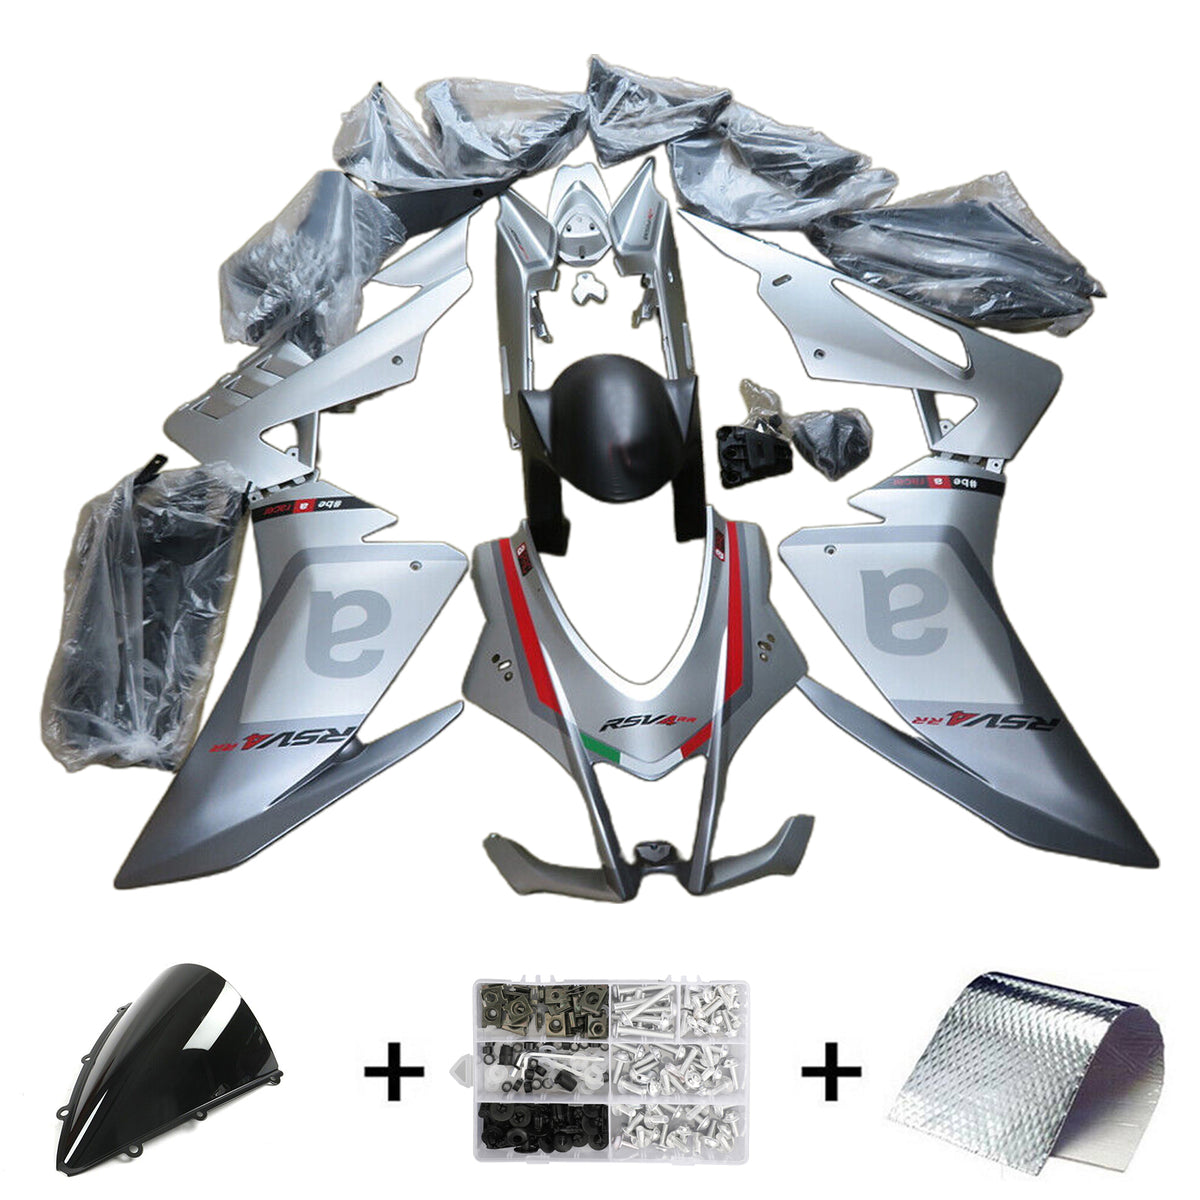 Amotopart 2009-2015 RSV4 1000 Aprilia Grey&Silver Fairing Kit